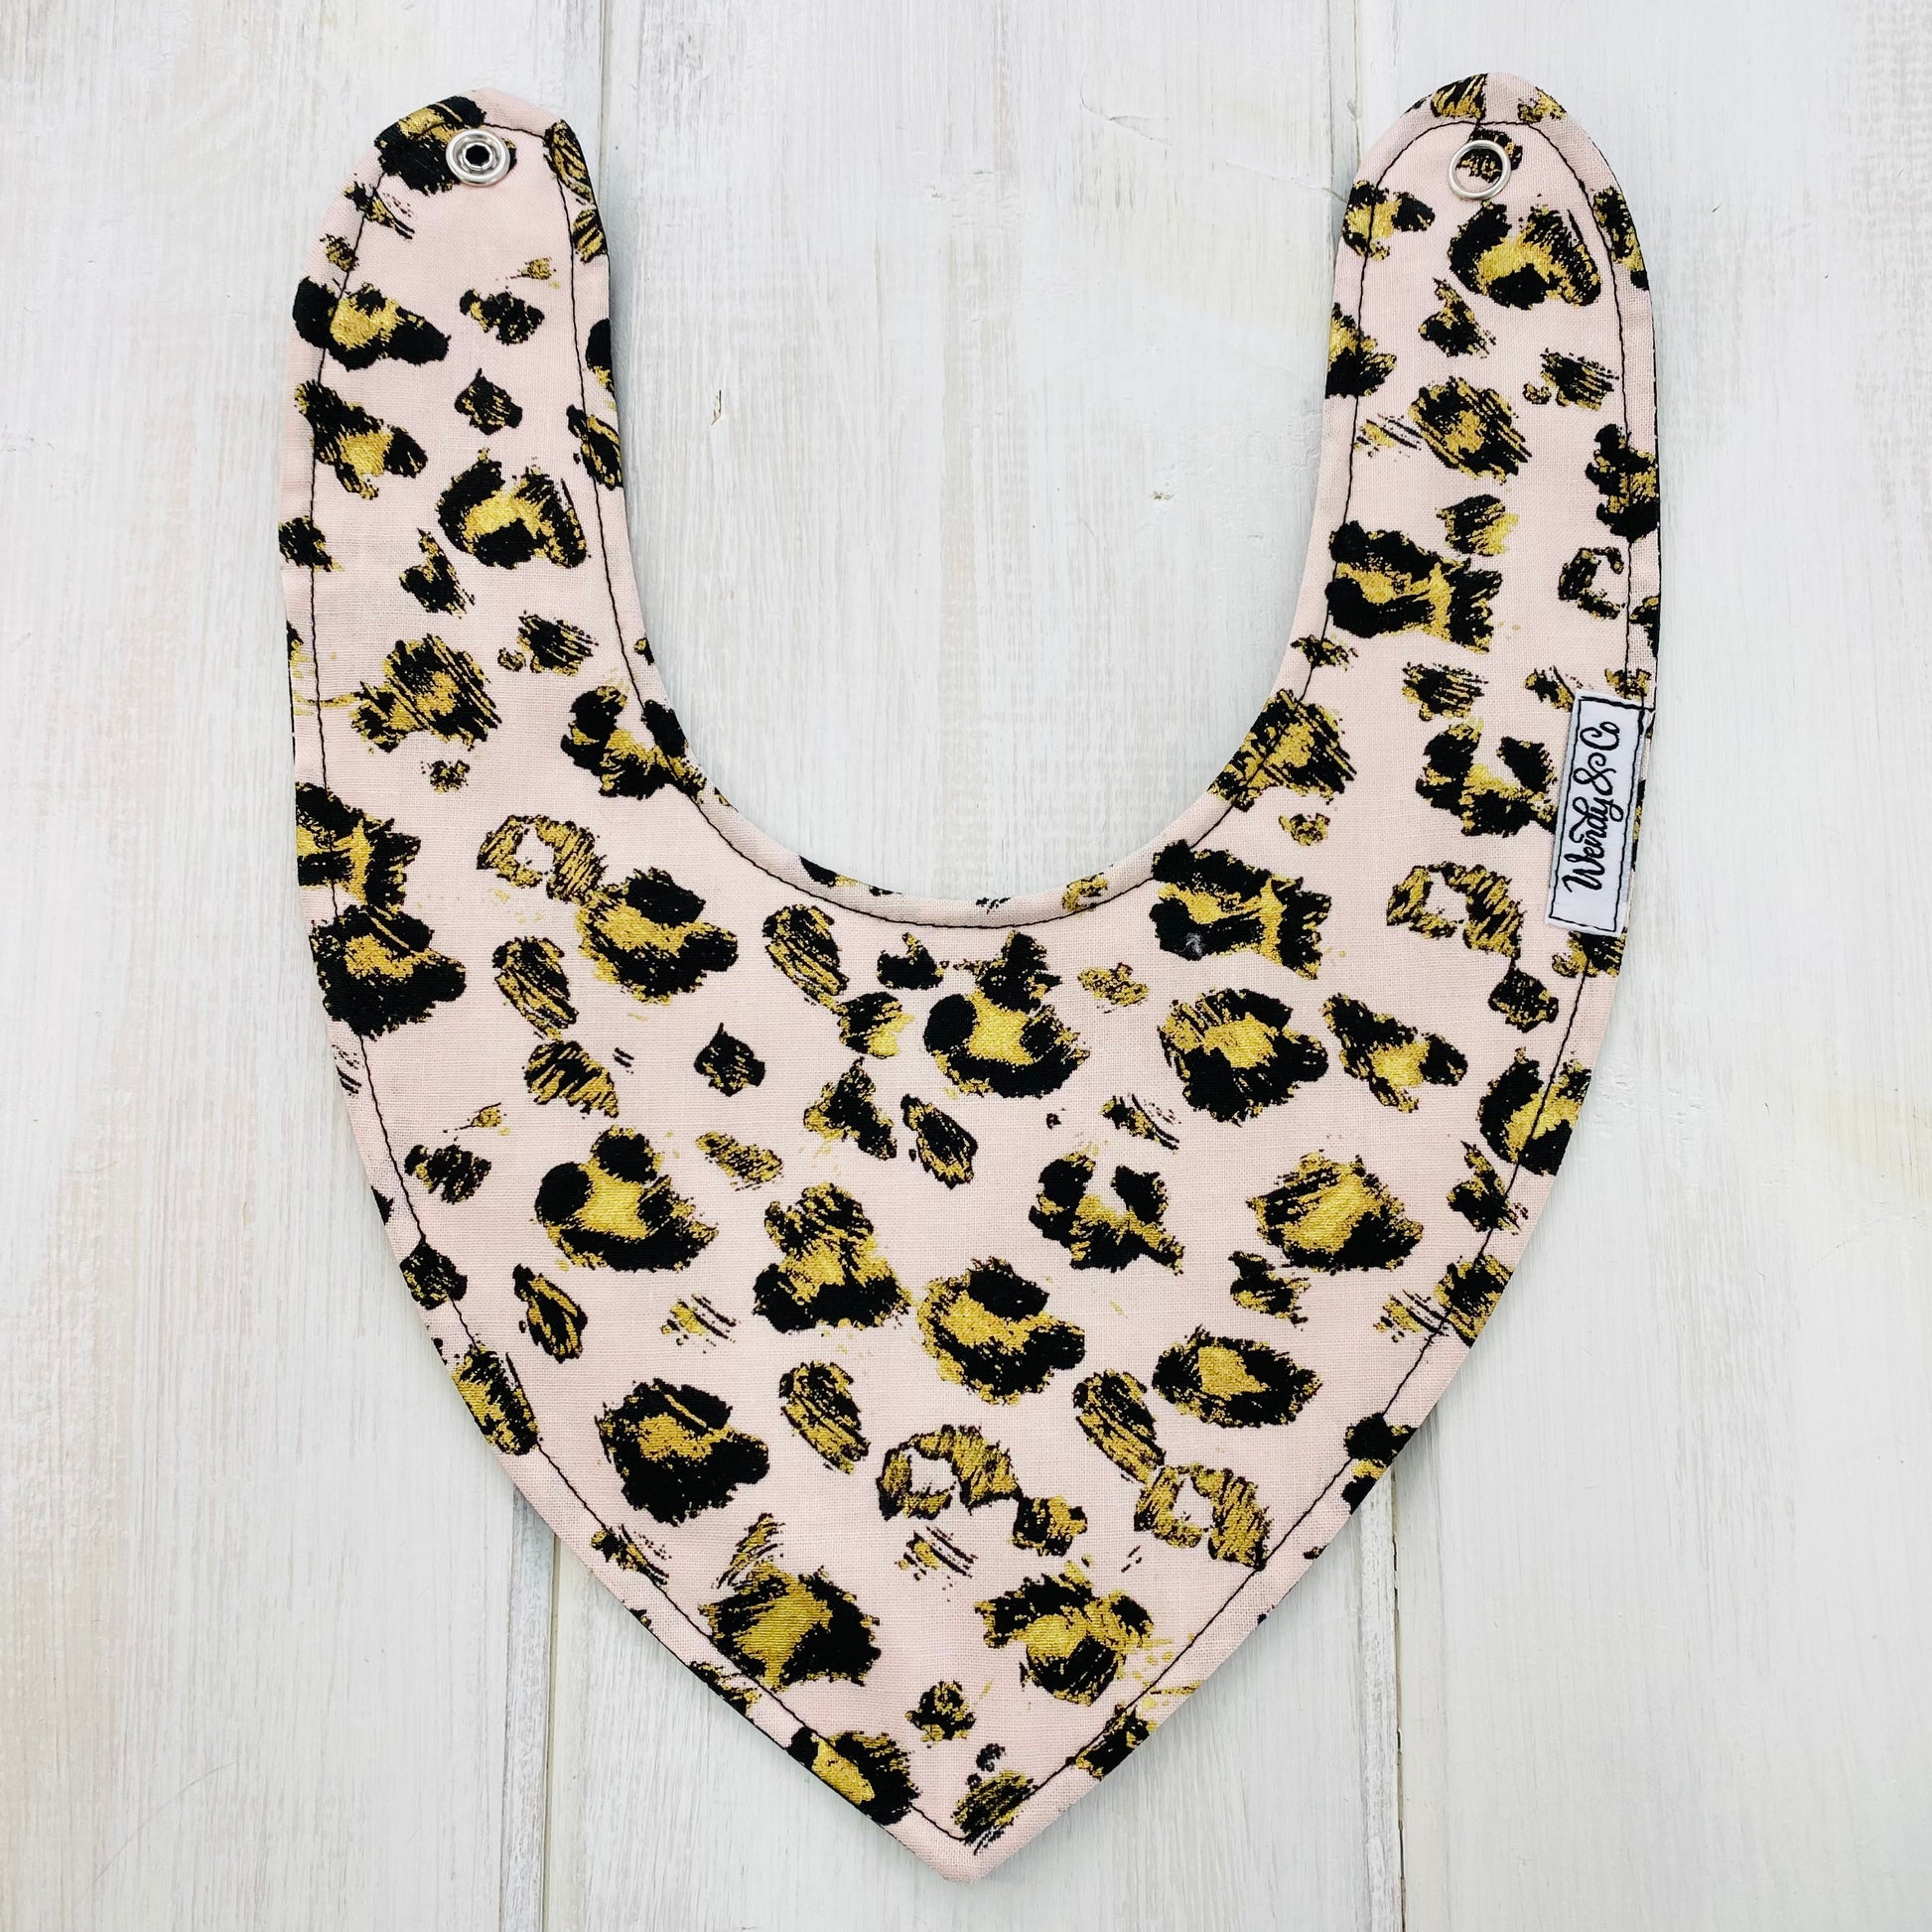 Blush cheetah print bandana bib with gold accents, animal print, reversible and waterproof bib.